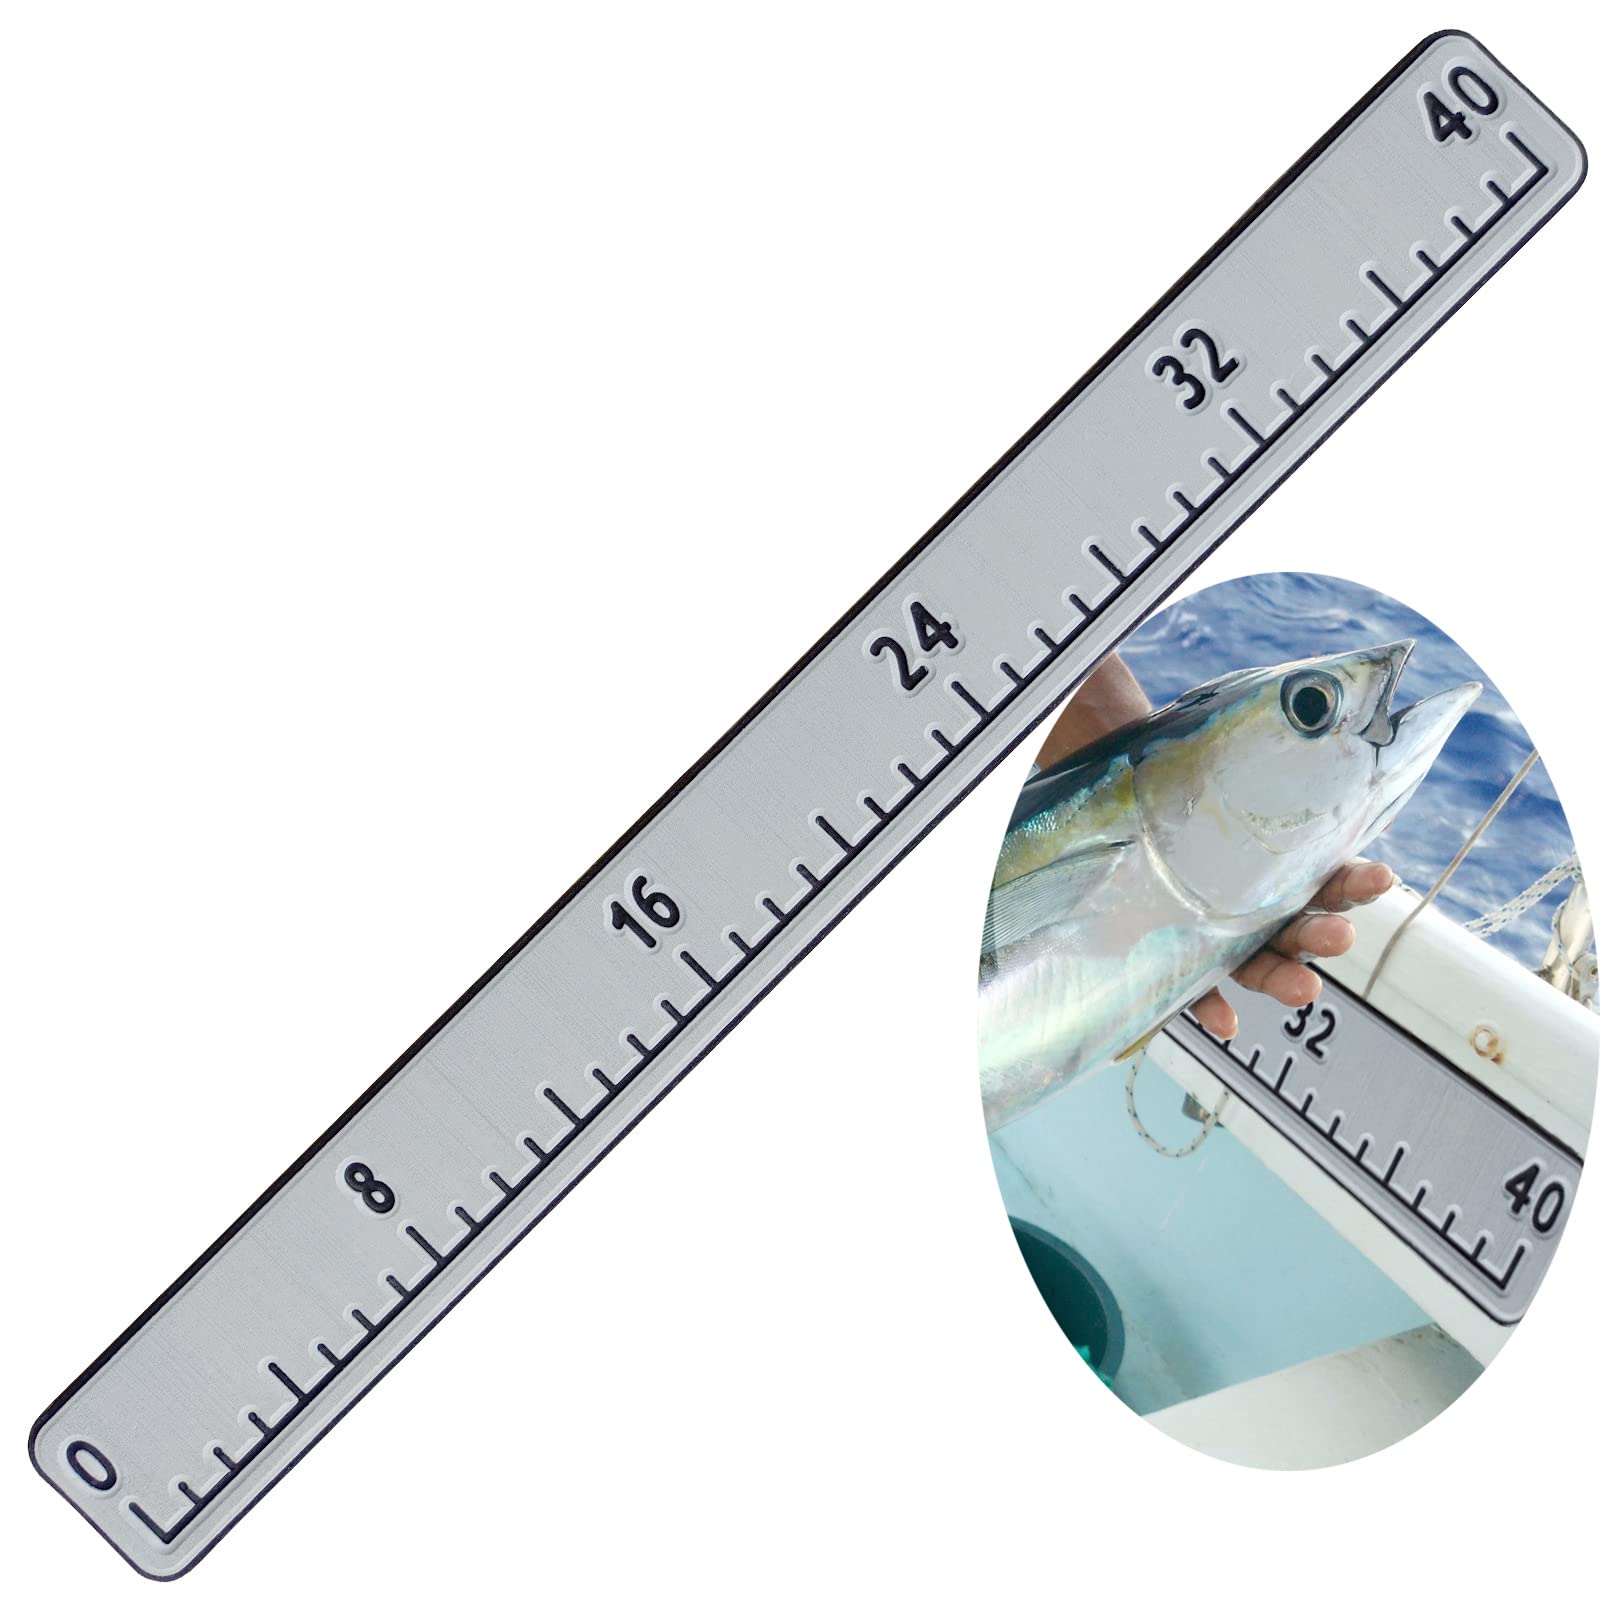 Hzkaicun/Fish Ruler/40/with Backing Adhesive/Fish Measuring